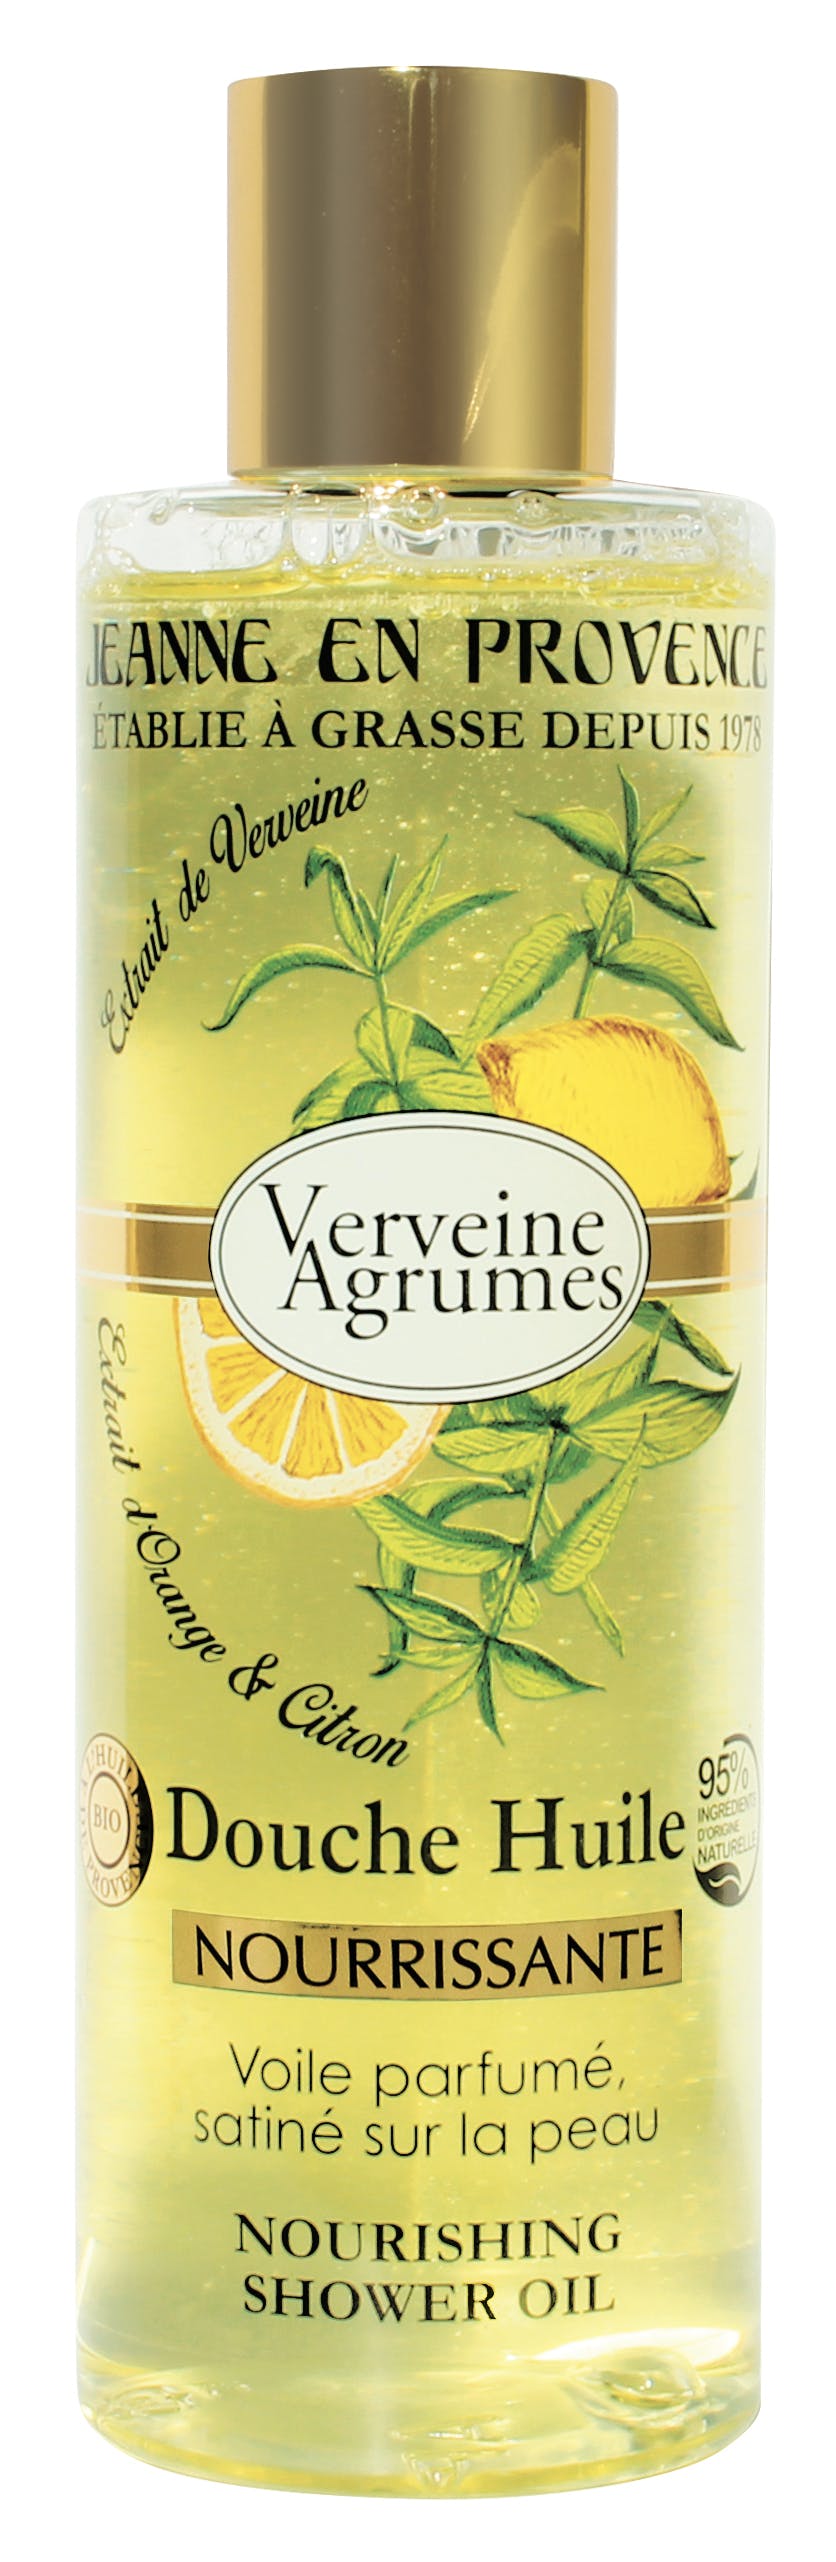 Jeanne en Provence Verveine Agrumes Shower Oil 250 ml